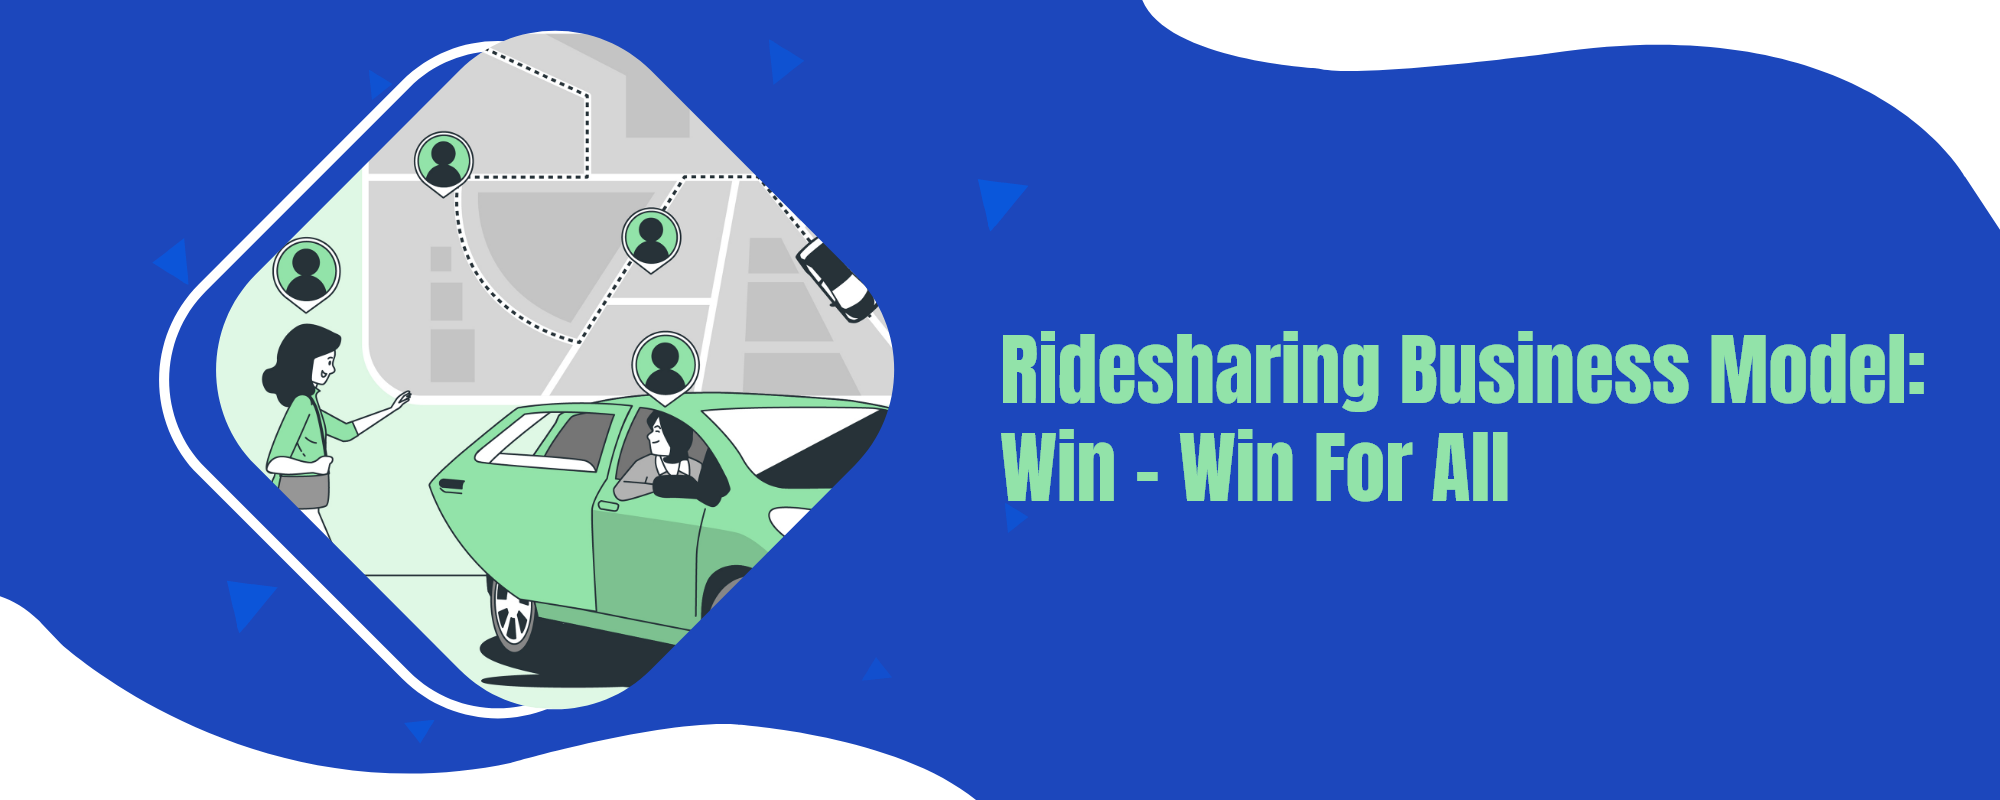 Ridesharing business model